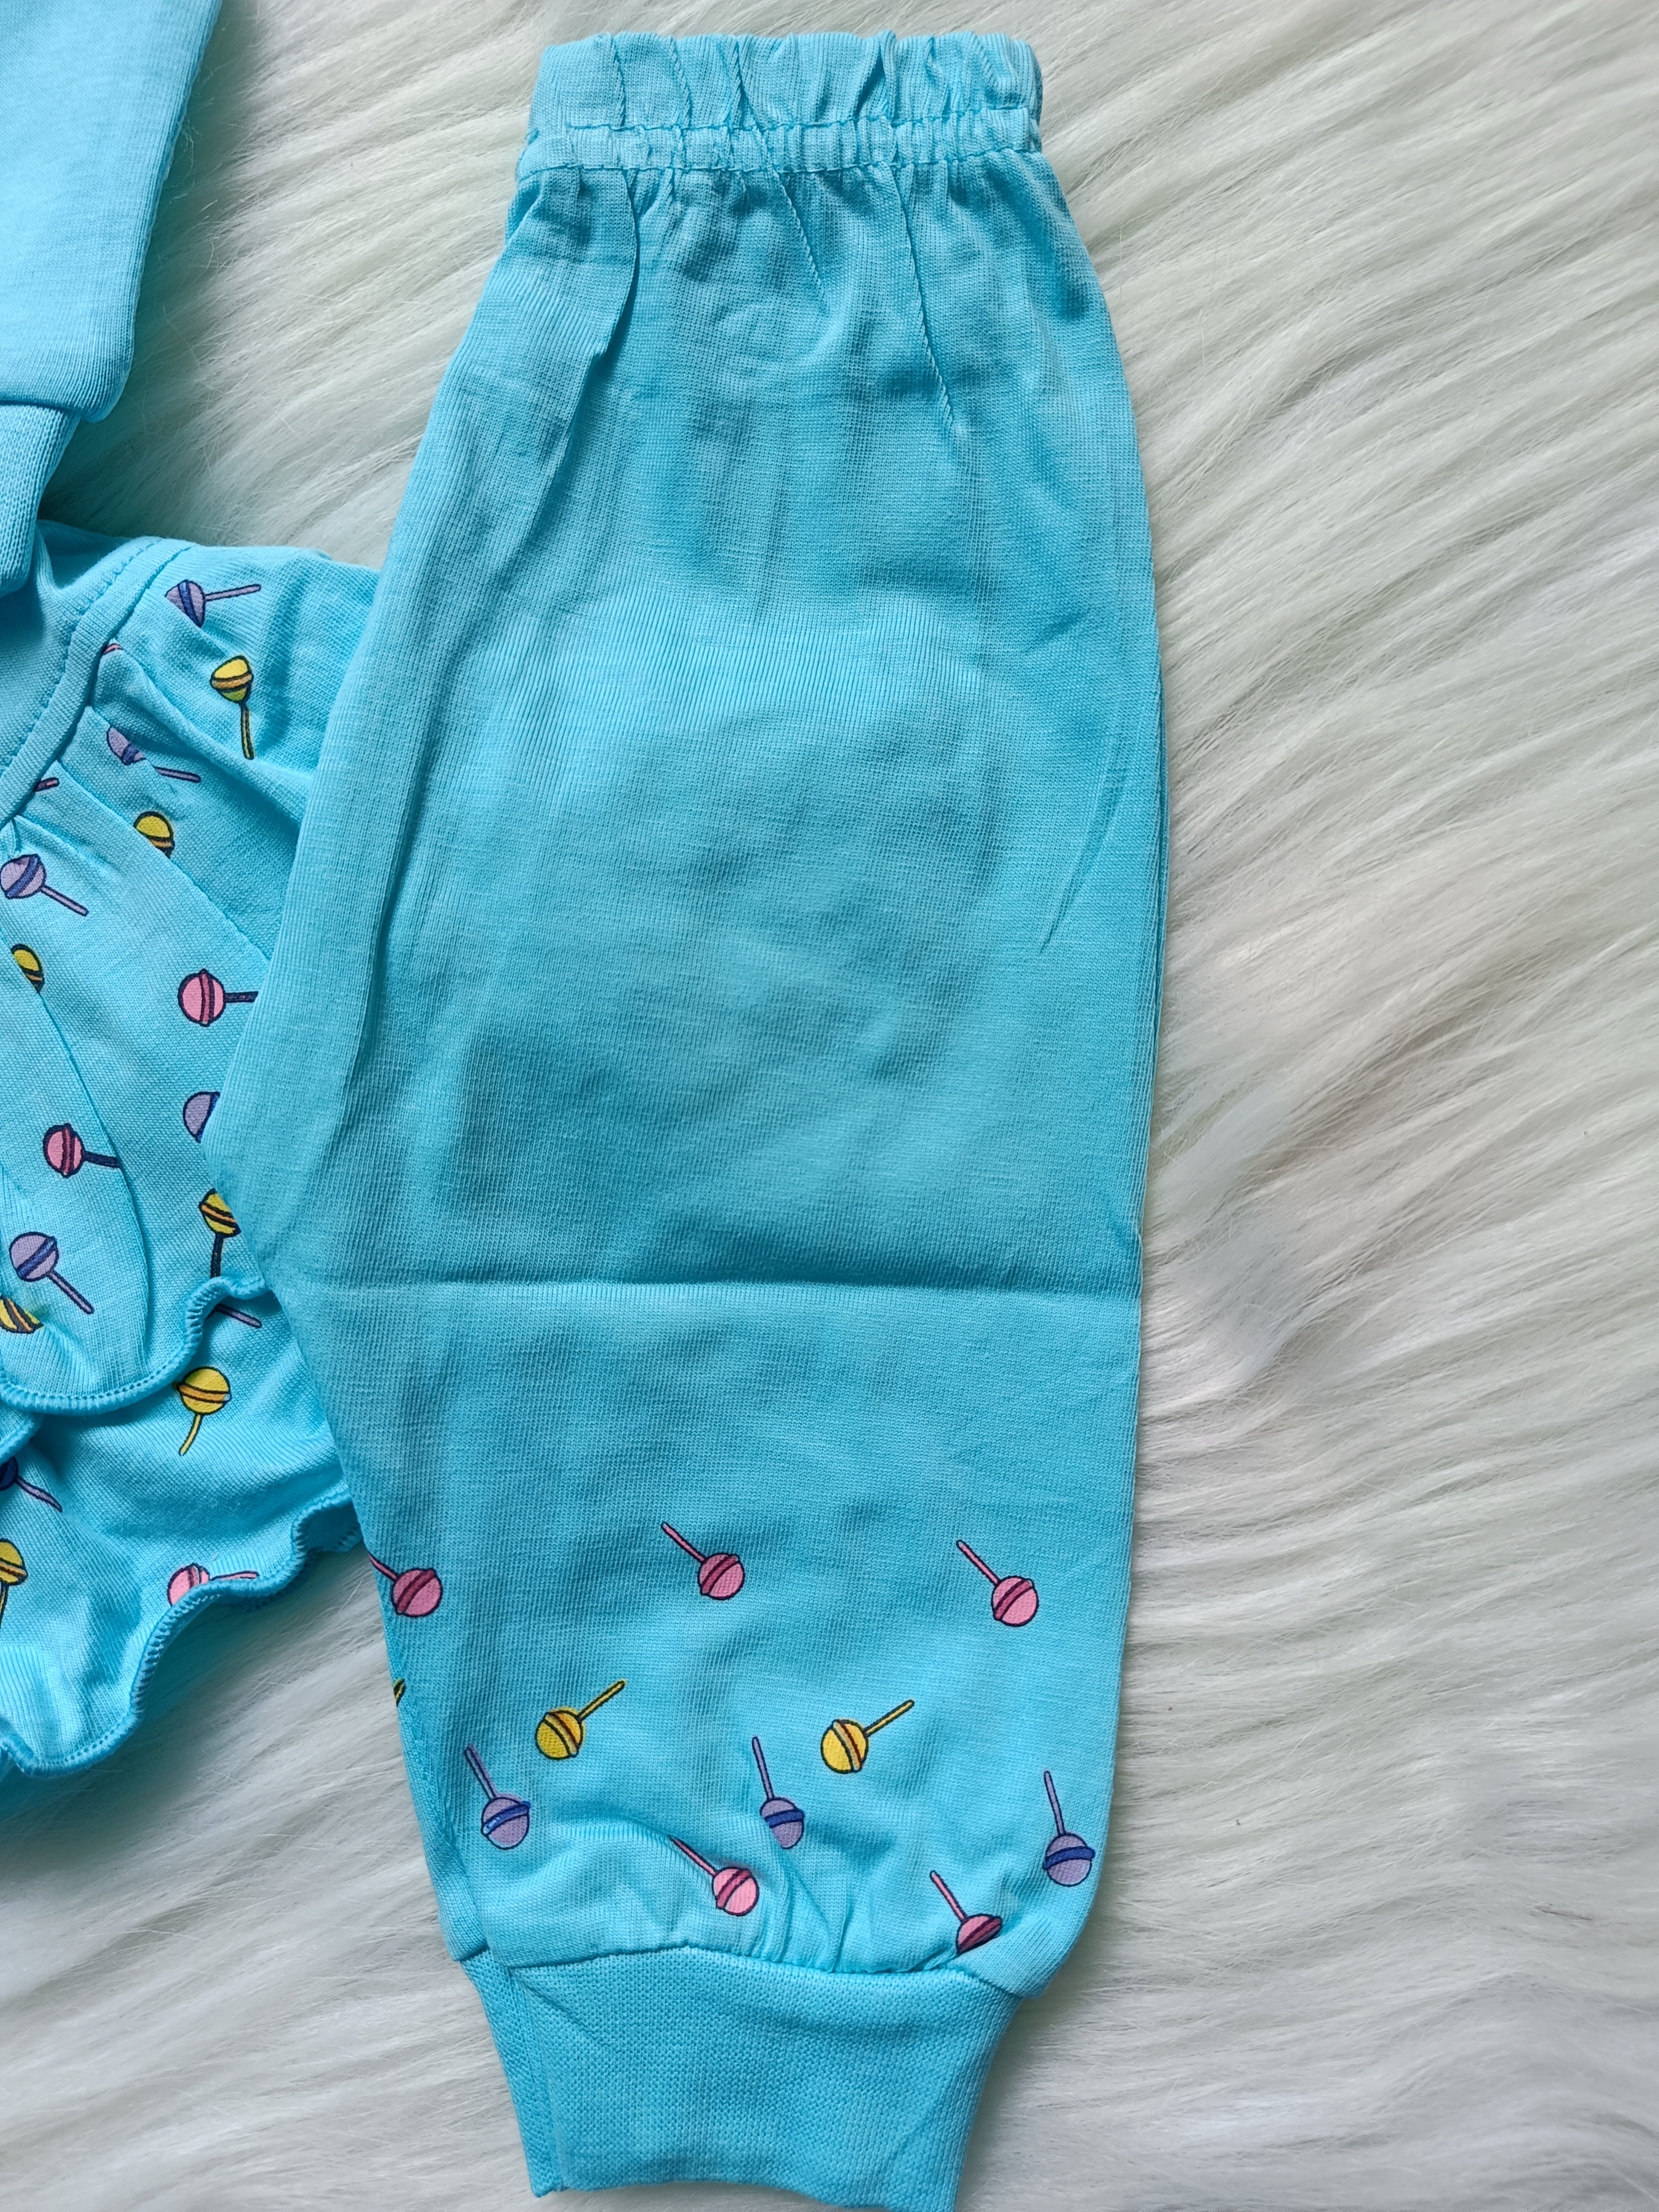 Frock with Pant Set - Playful Suit (Cyan Blue)